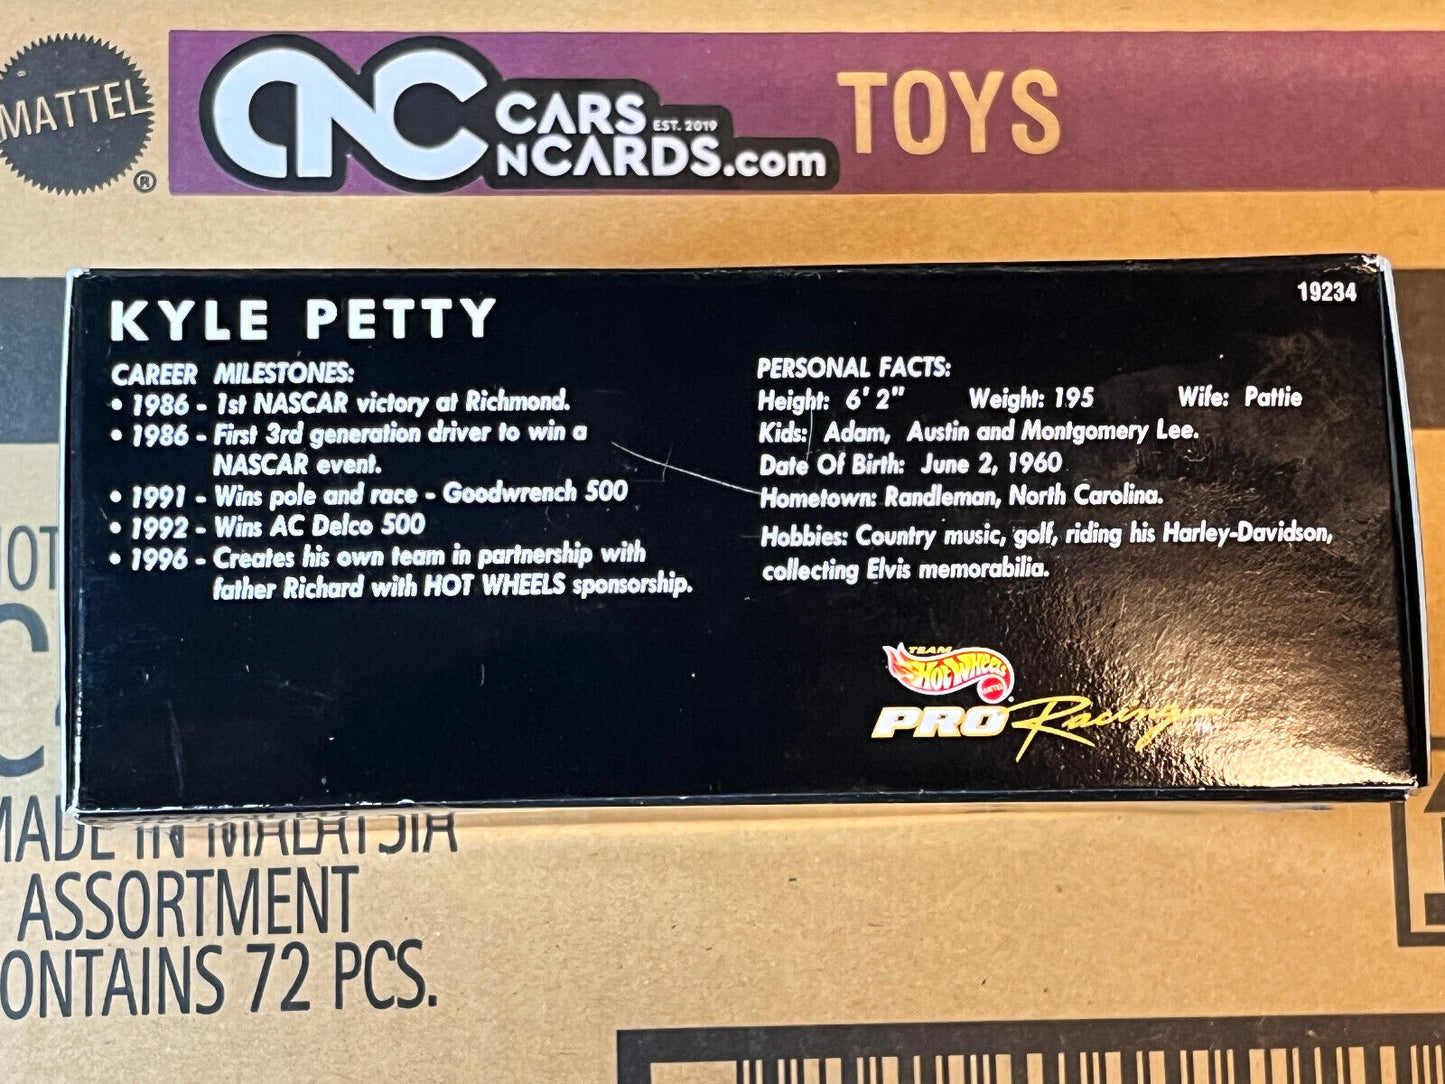 1997 Hot Wheels Pro Racing Nascar Kyle Petty #44 1:24 Scale NIP